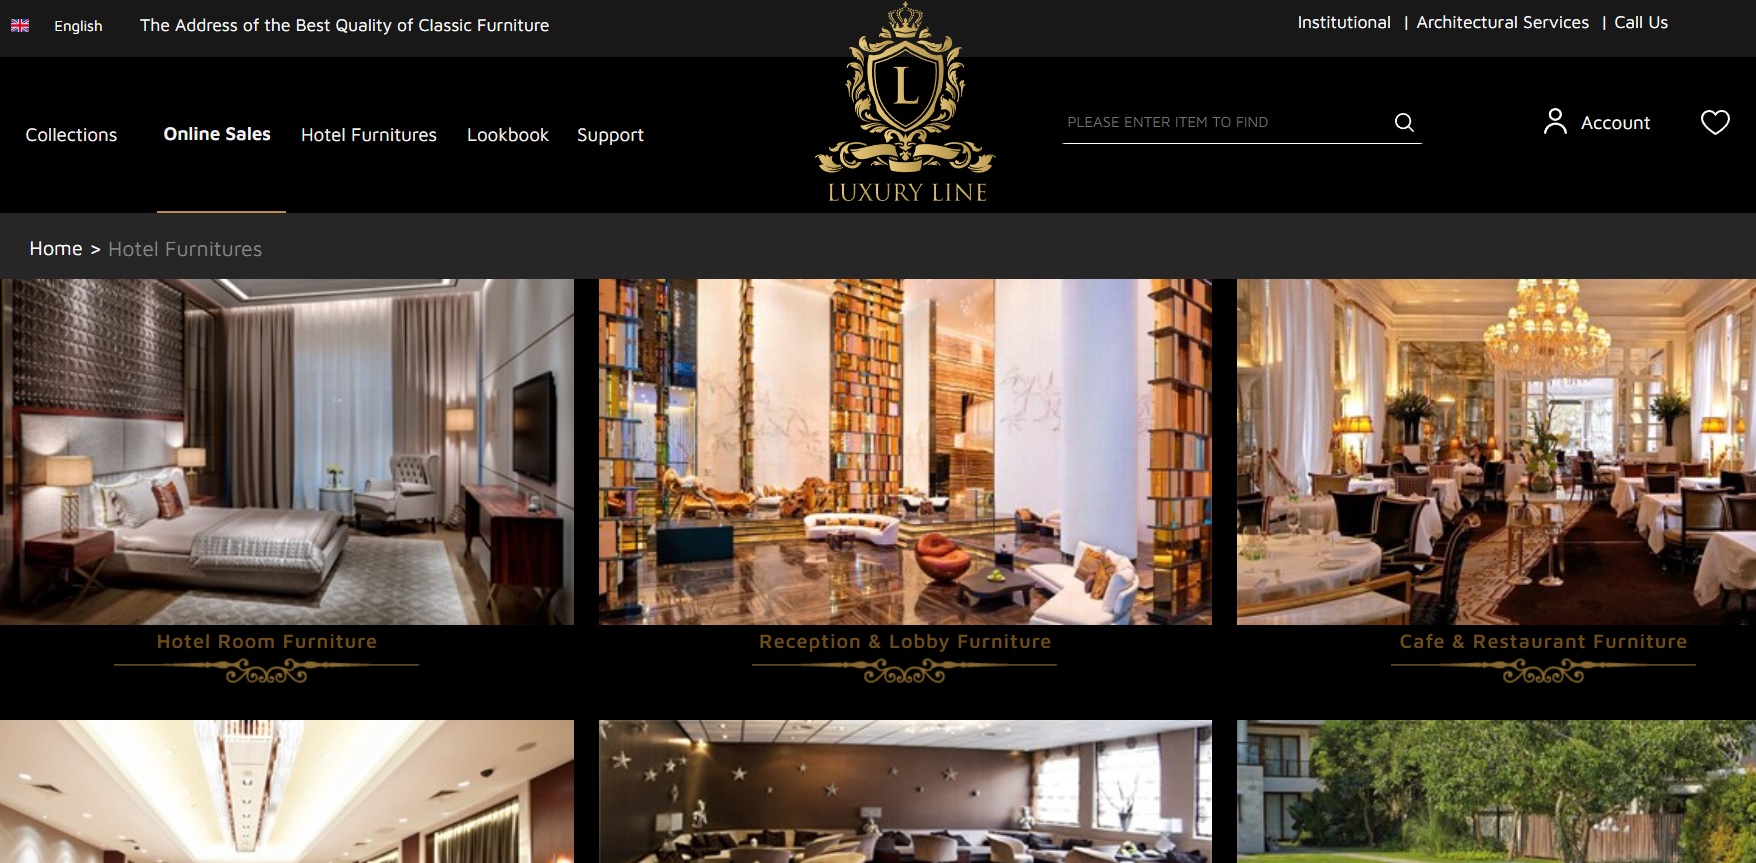 Luxury Line tyrkiske luksushotelmøbler